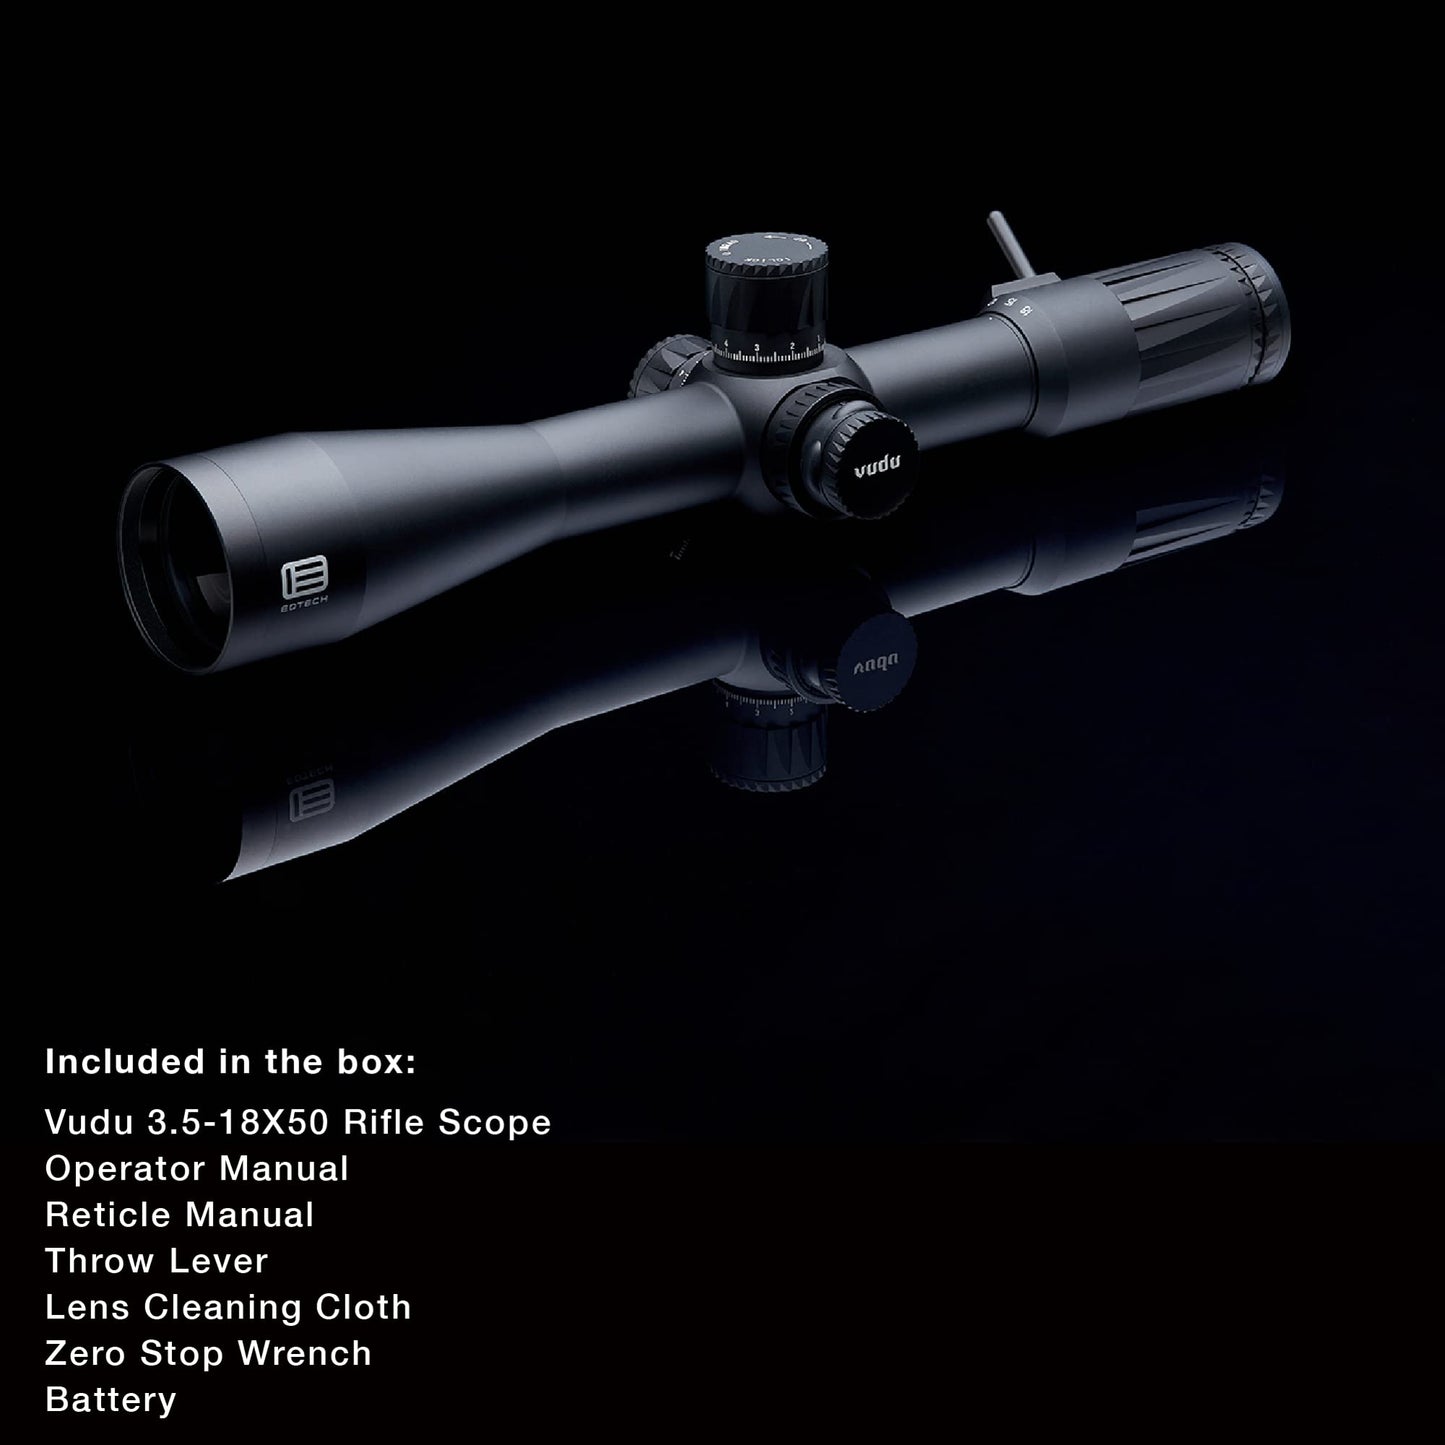 EOTECH Vudu 3.5-18x50 FFP Riflescope - MD1 Reticle (MRAD) - VDU3-18FFMD1